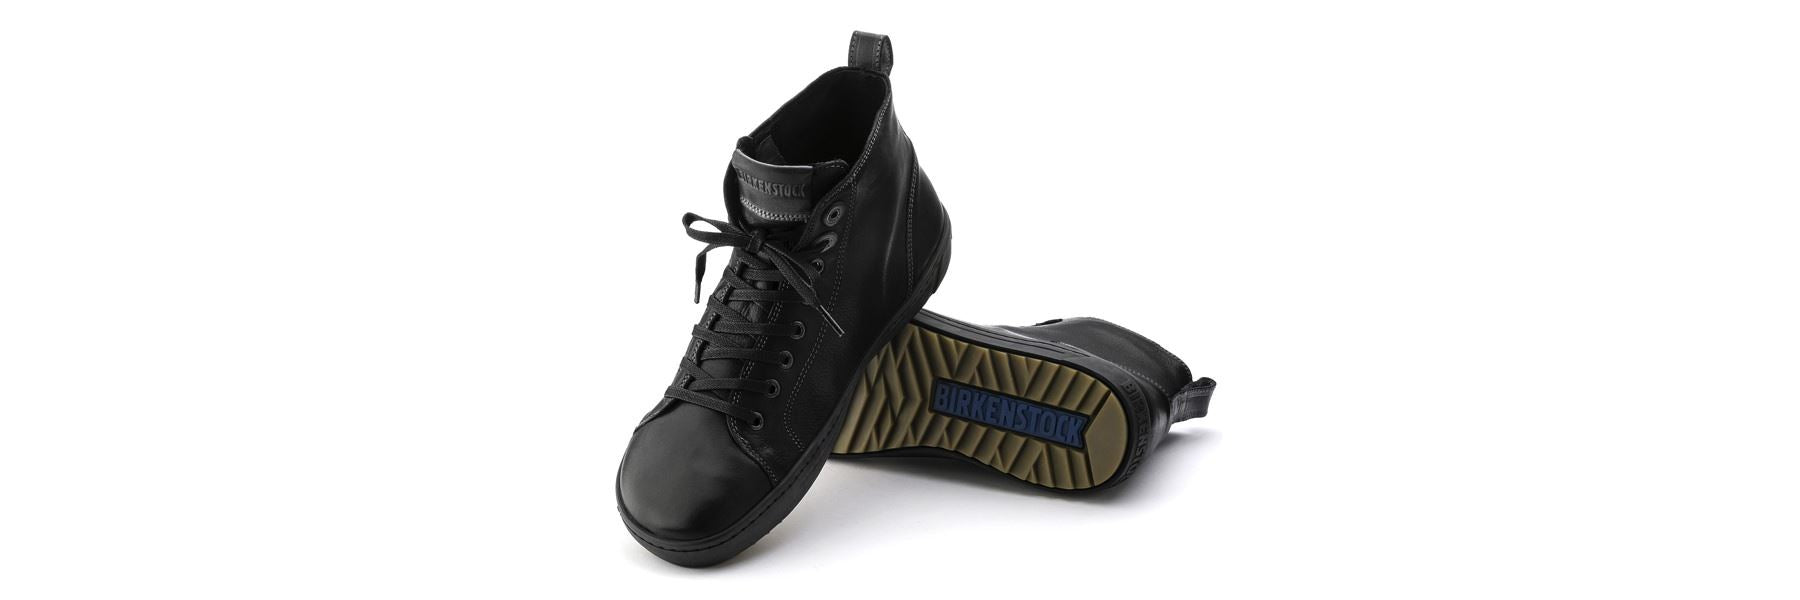 birkenstock bartlett sneaker boot